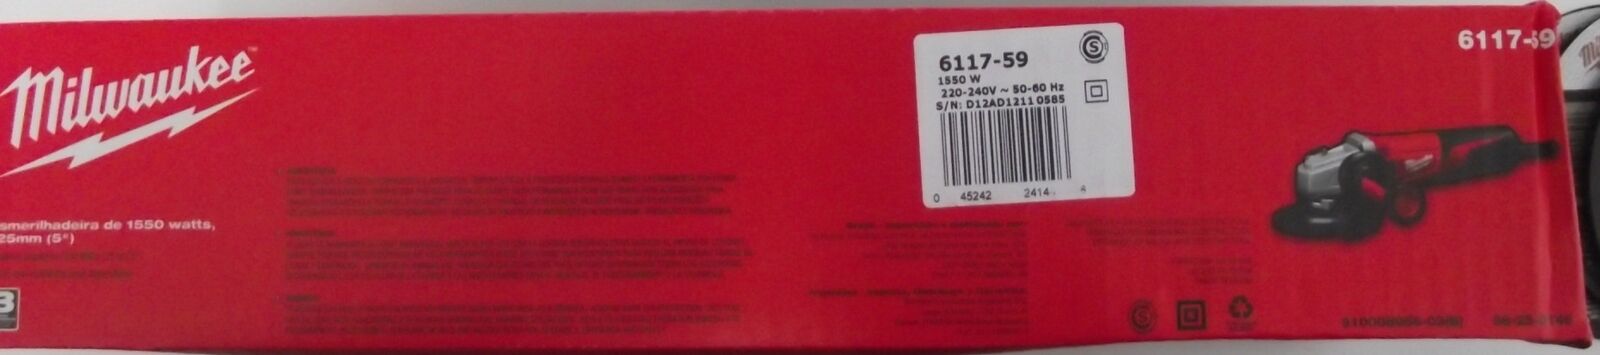 Milwaukee 6117-59P 5" 1500 Watt Angle Grinder With Bag & 3 Discs 220V